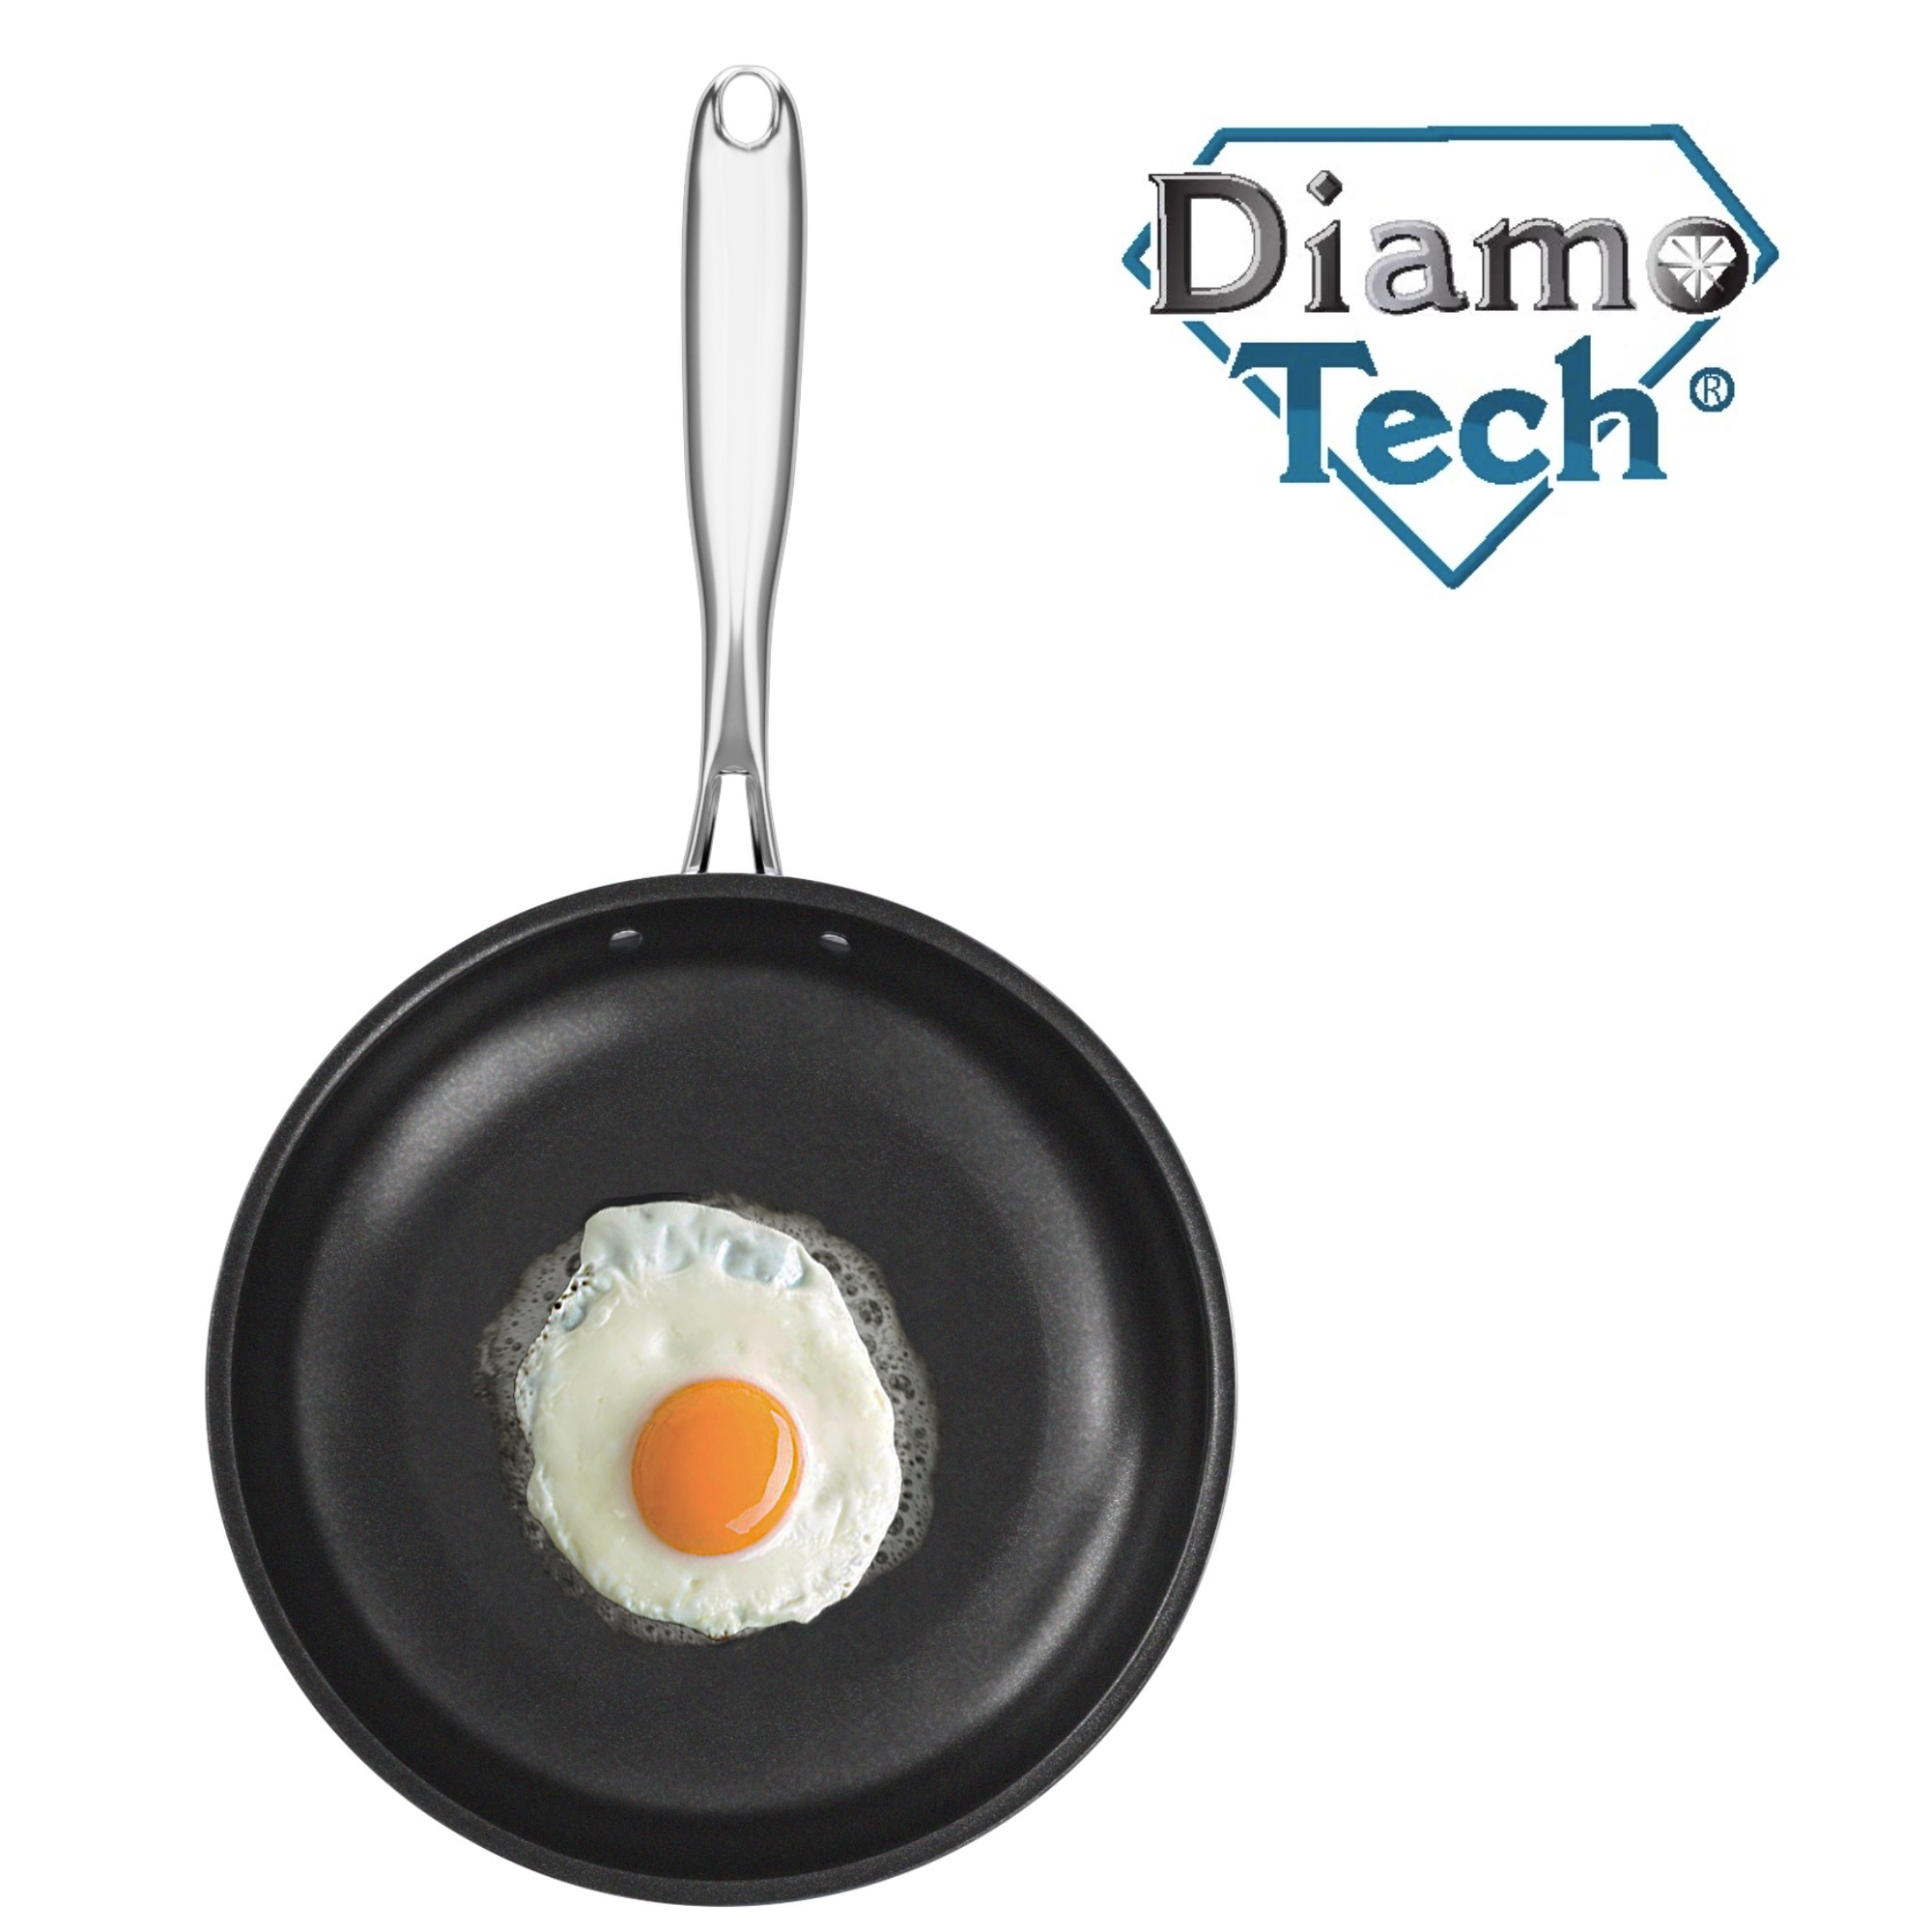 DiamoTech Toxin Free Ceramic Metal Utensil Oven Safe, 9.5 inch Fry Pan/Skillet - image 4 of 8